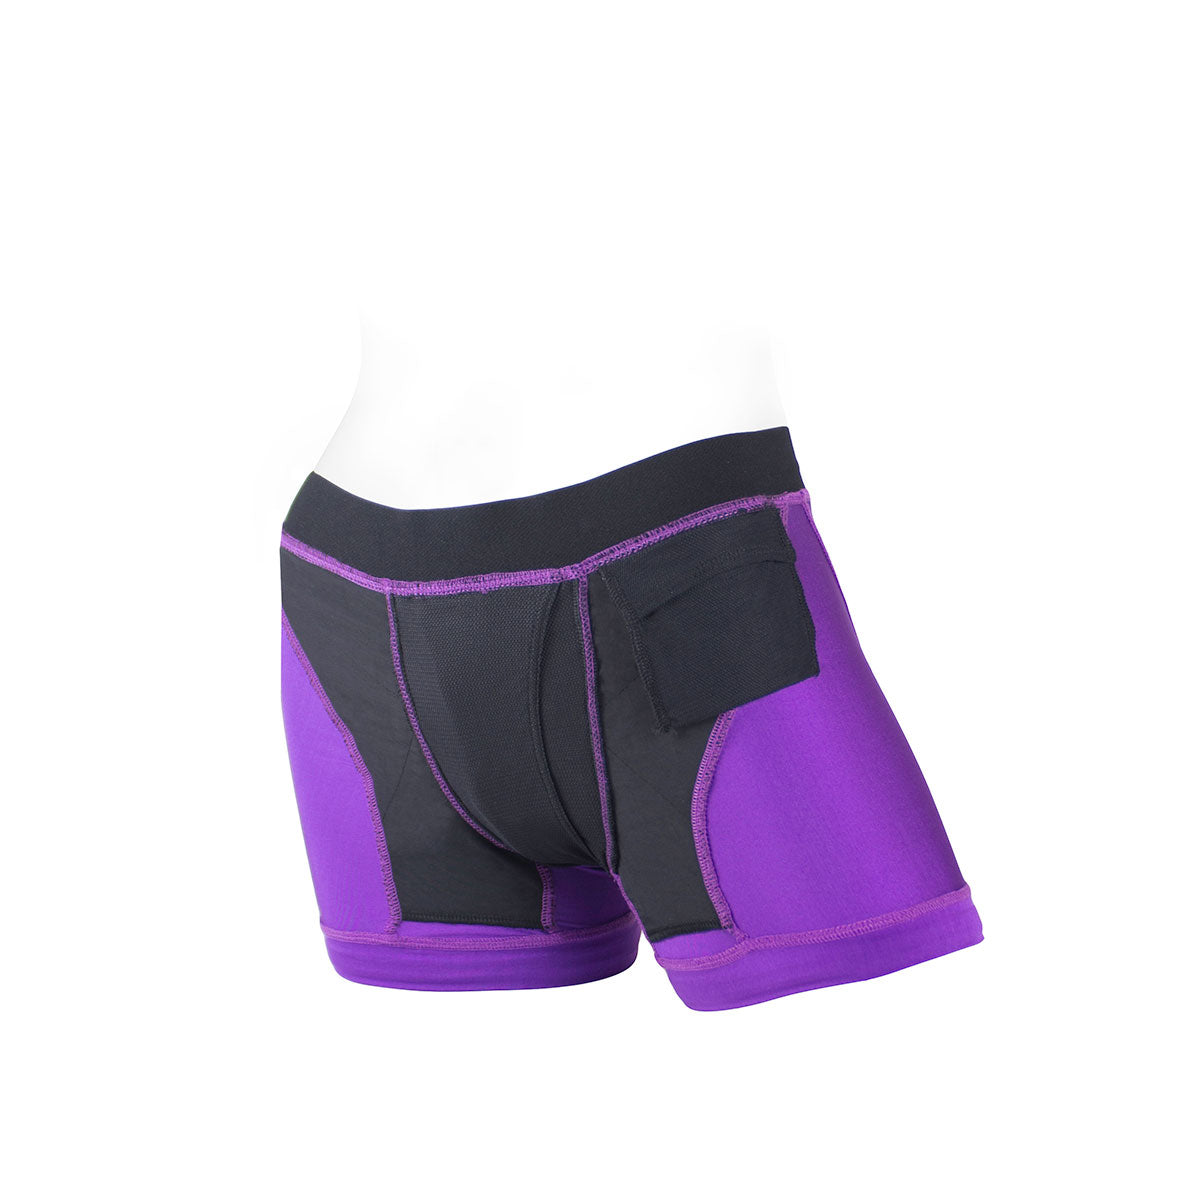 SpareParts Tomboii Purple-Black Nylon - Large Intimates Adult Boutique